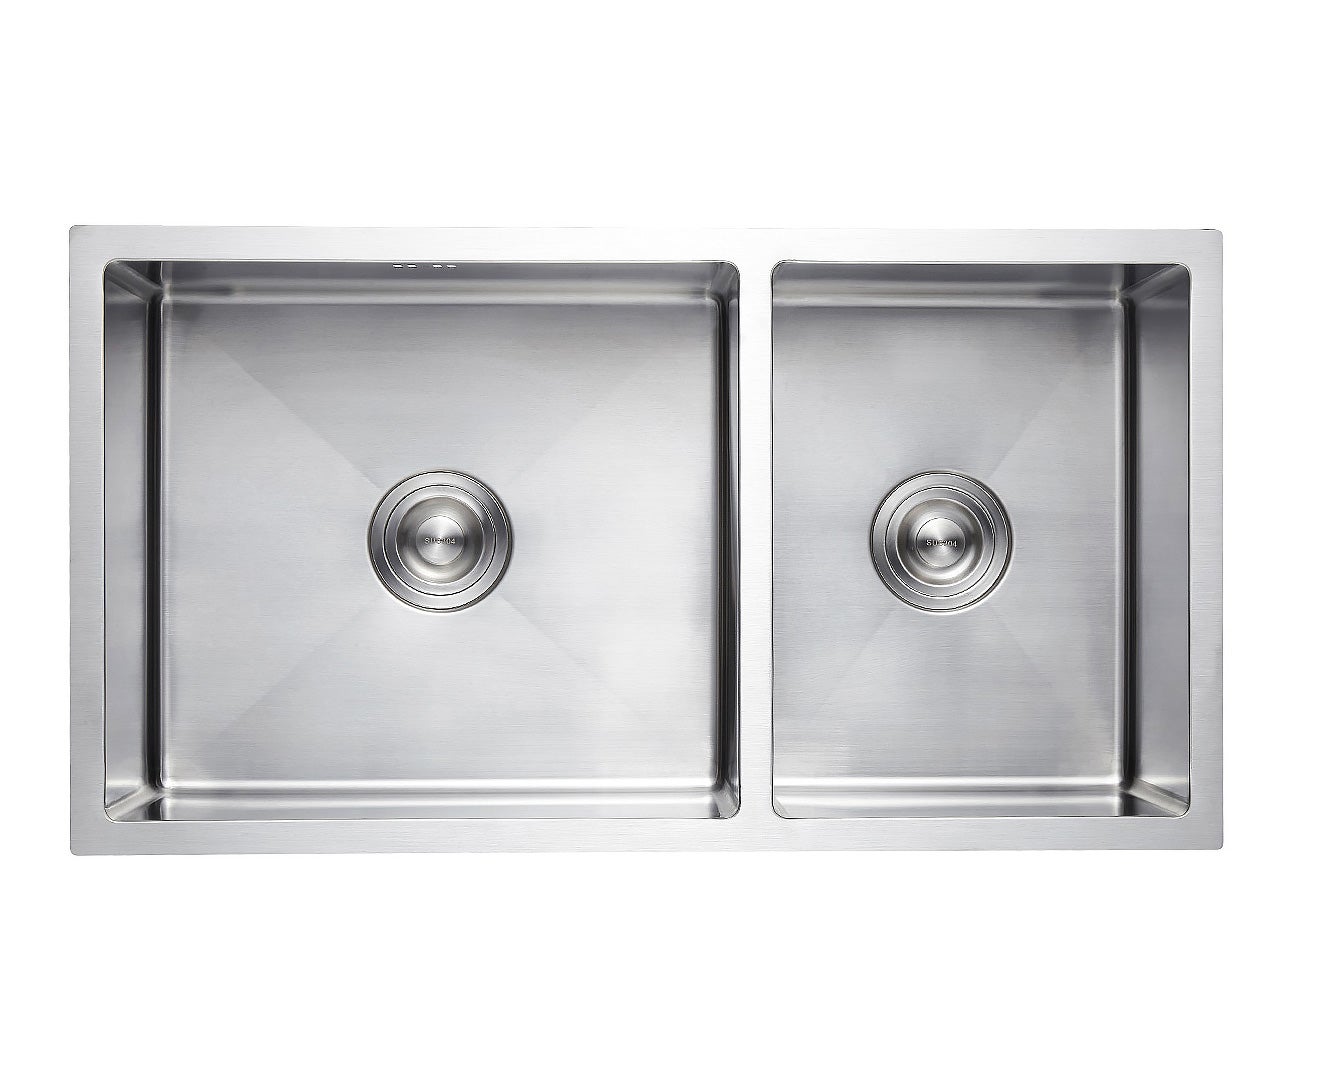 715x450mm Handmade Stainless Steel Undermount Topmount Kitchen Laundry Sink 304